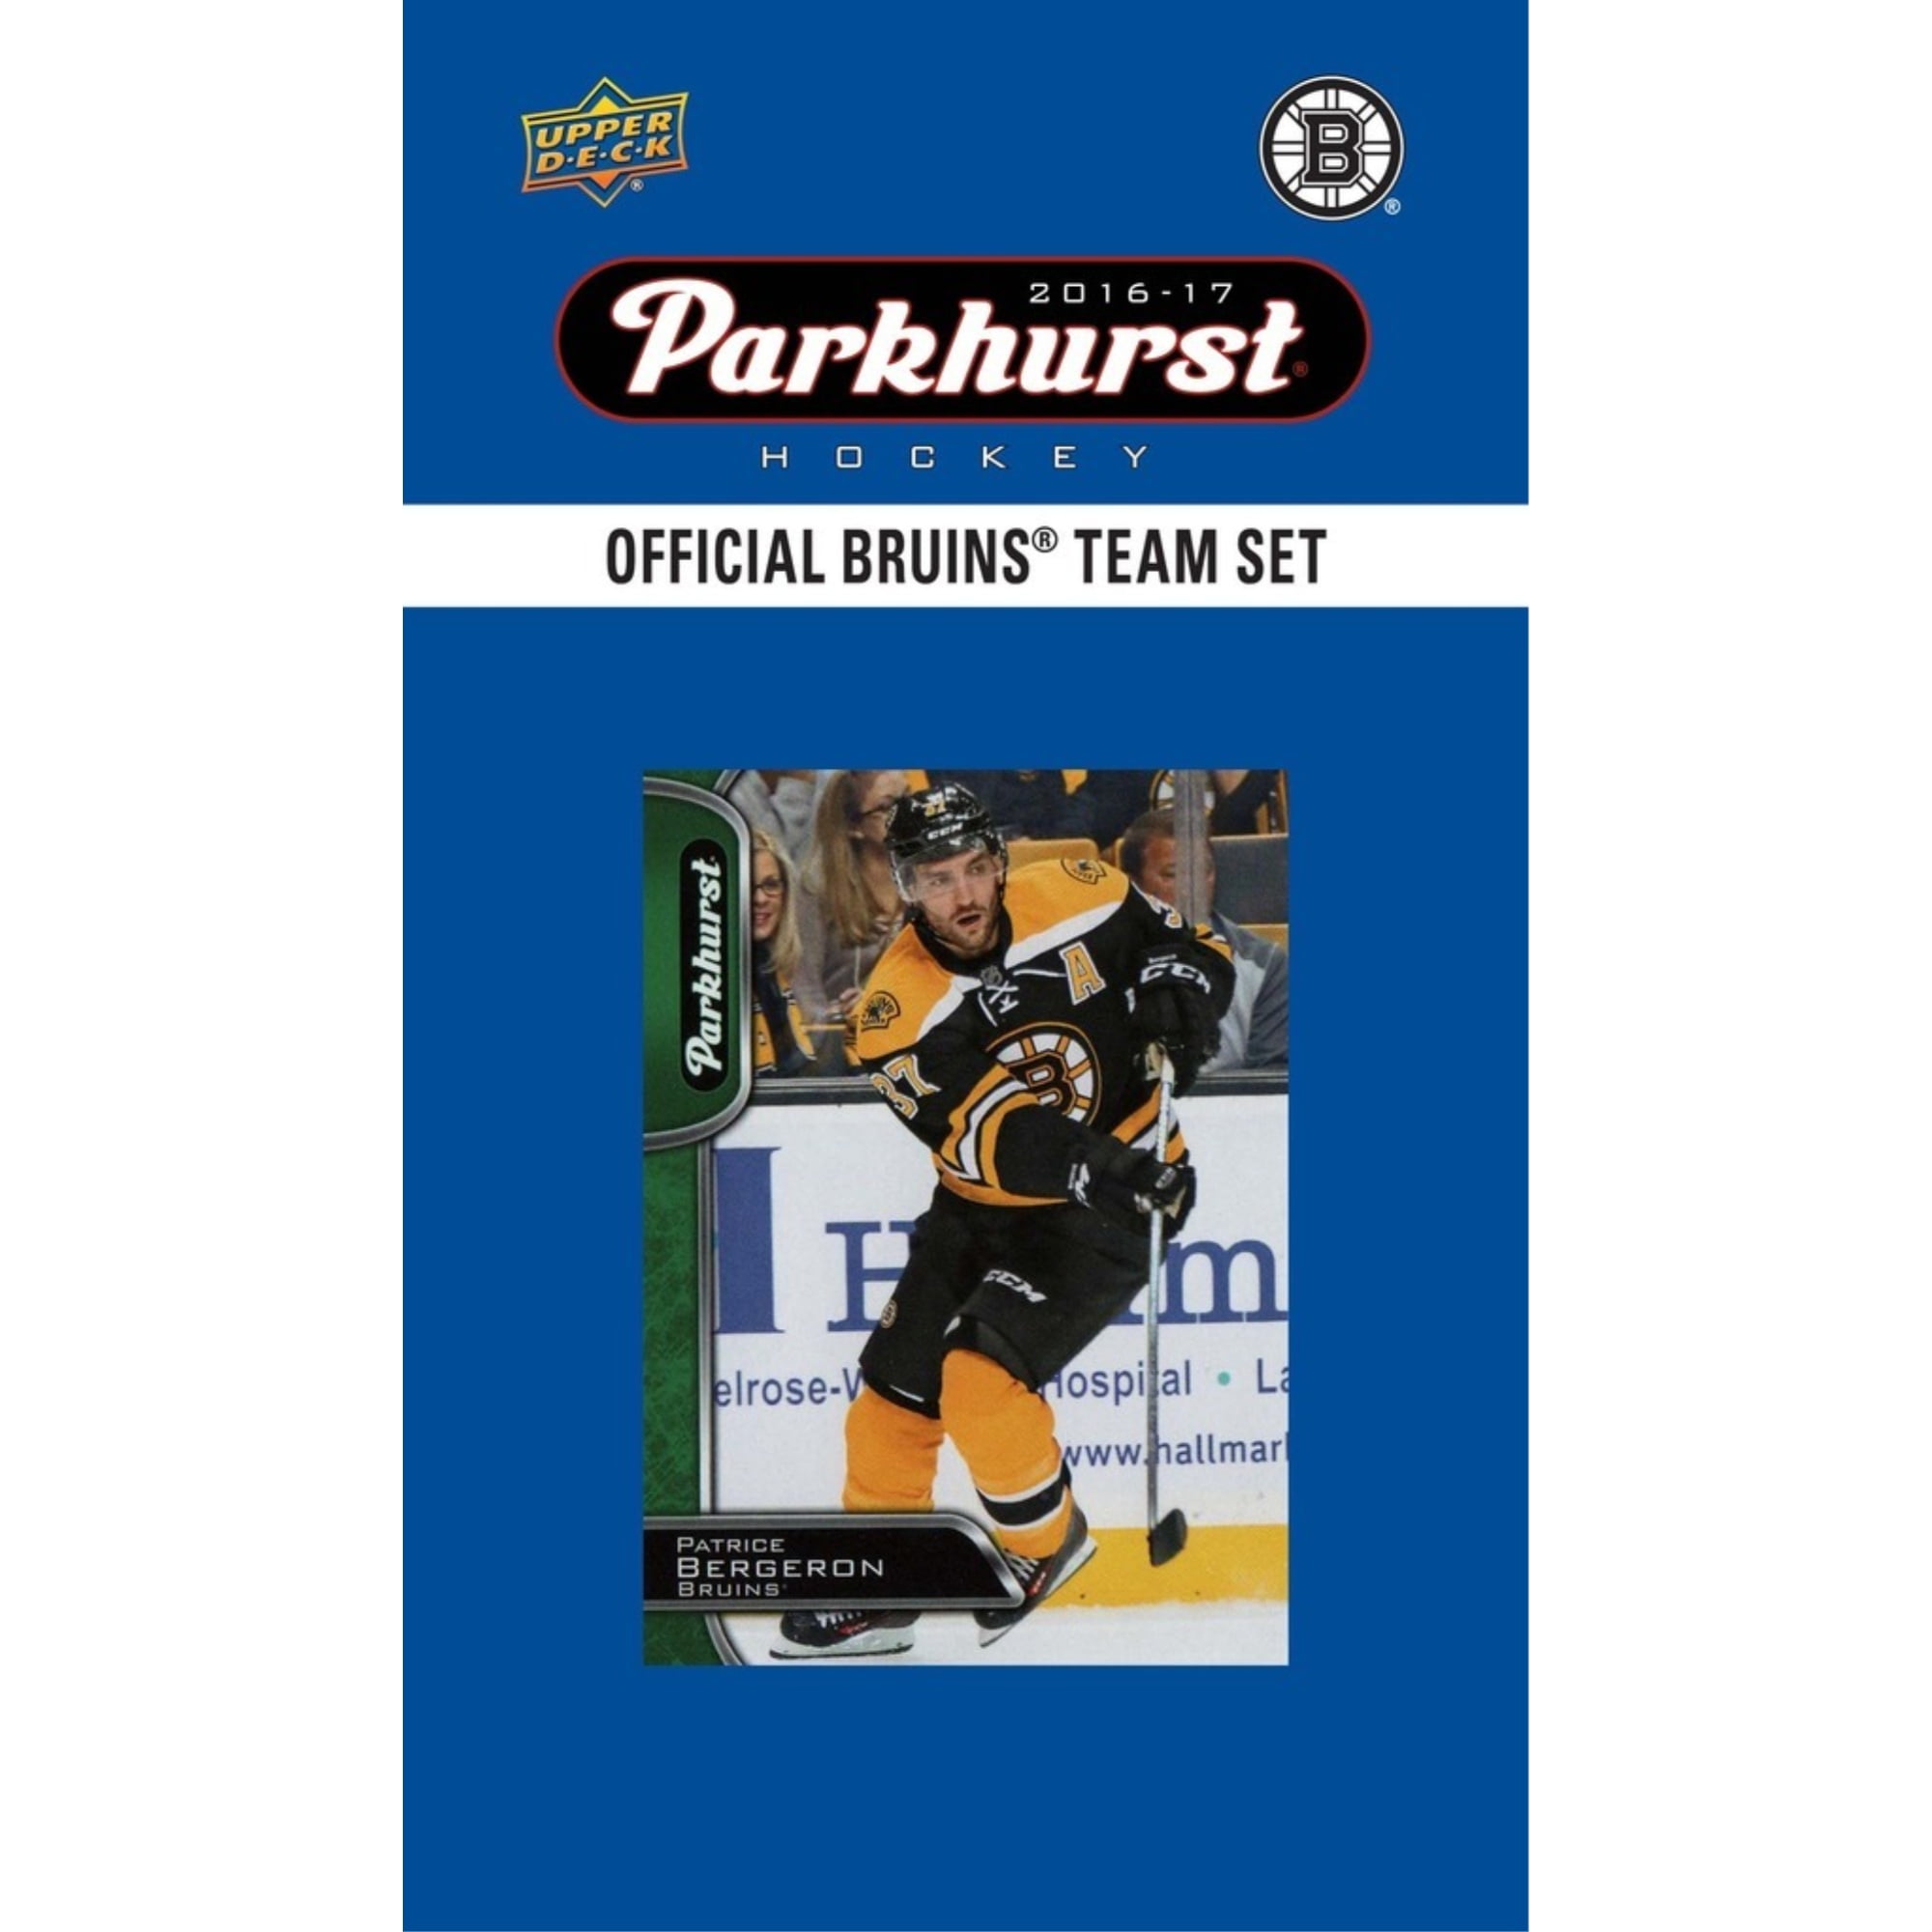 Nhl Boston Bruins 2016 Parkhurst Team Set And An All Star Set Walmart